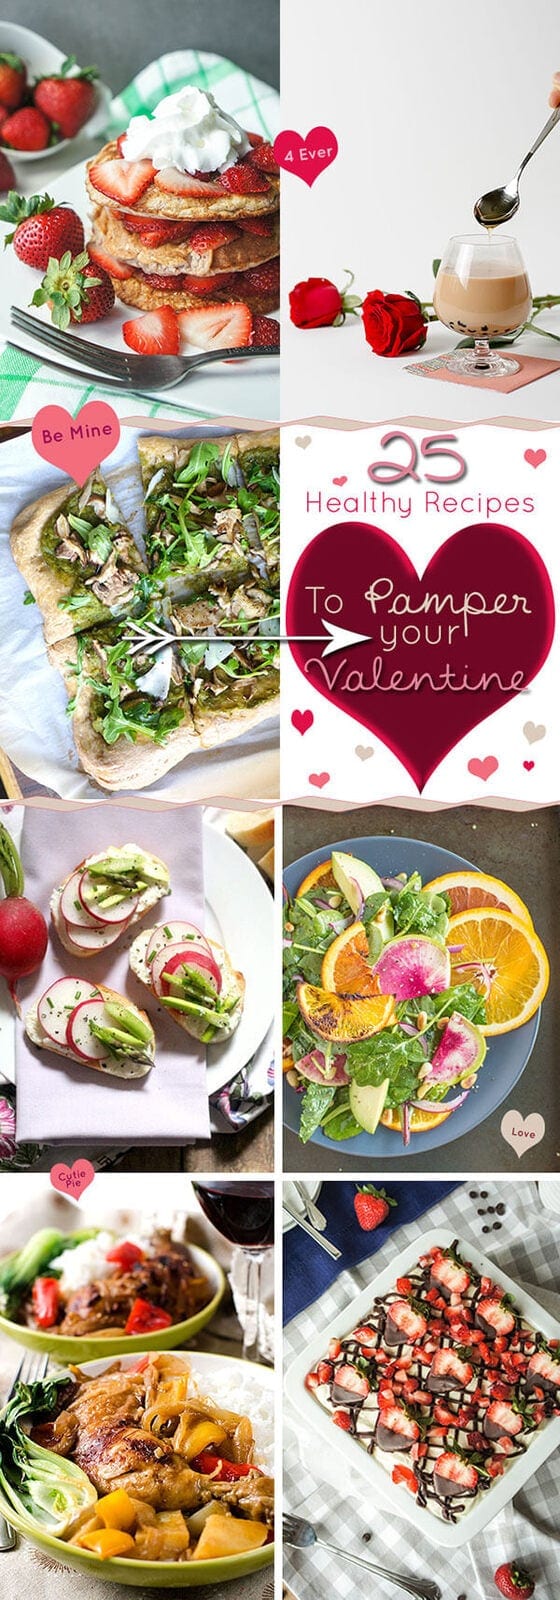 25 Healthy Recipes to Pamper Your Valentine - Cover | omnivorescookbook.com